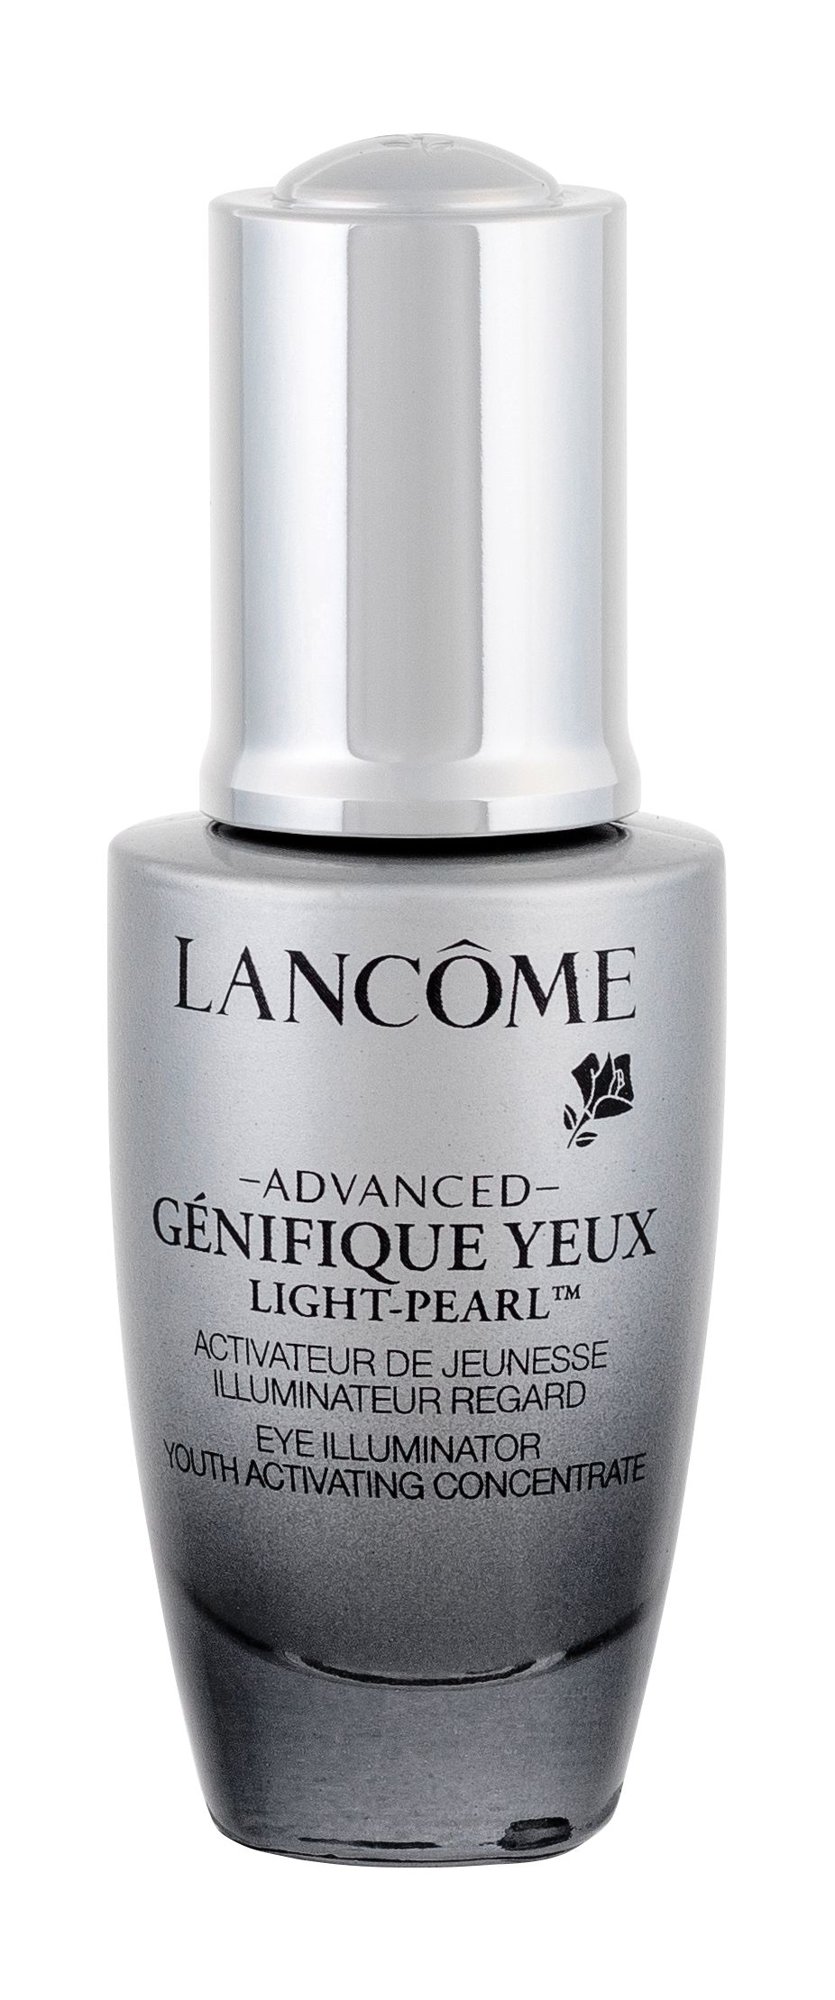 Lancome Advanced Genifique Yeux Light-Pearl Eye Iluminator